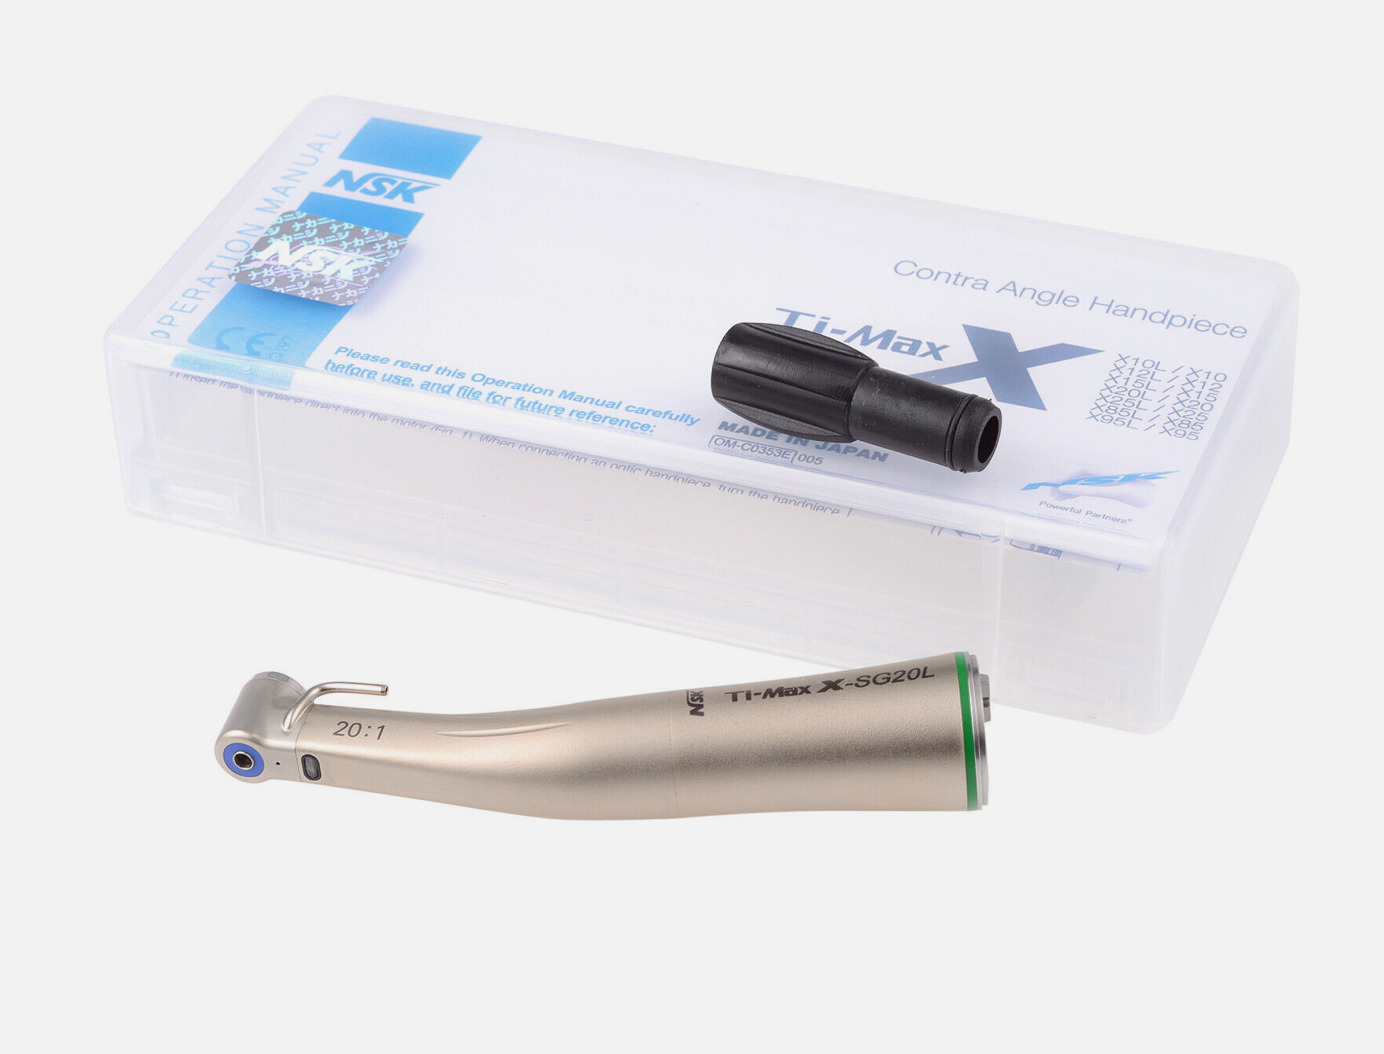 Dental Ti-Max 20:1 Fiber Optic Implant Contra Angle Handpiece SG20L/SG20 Fit NSK